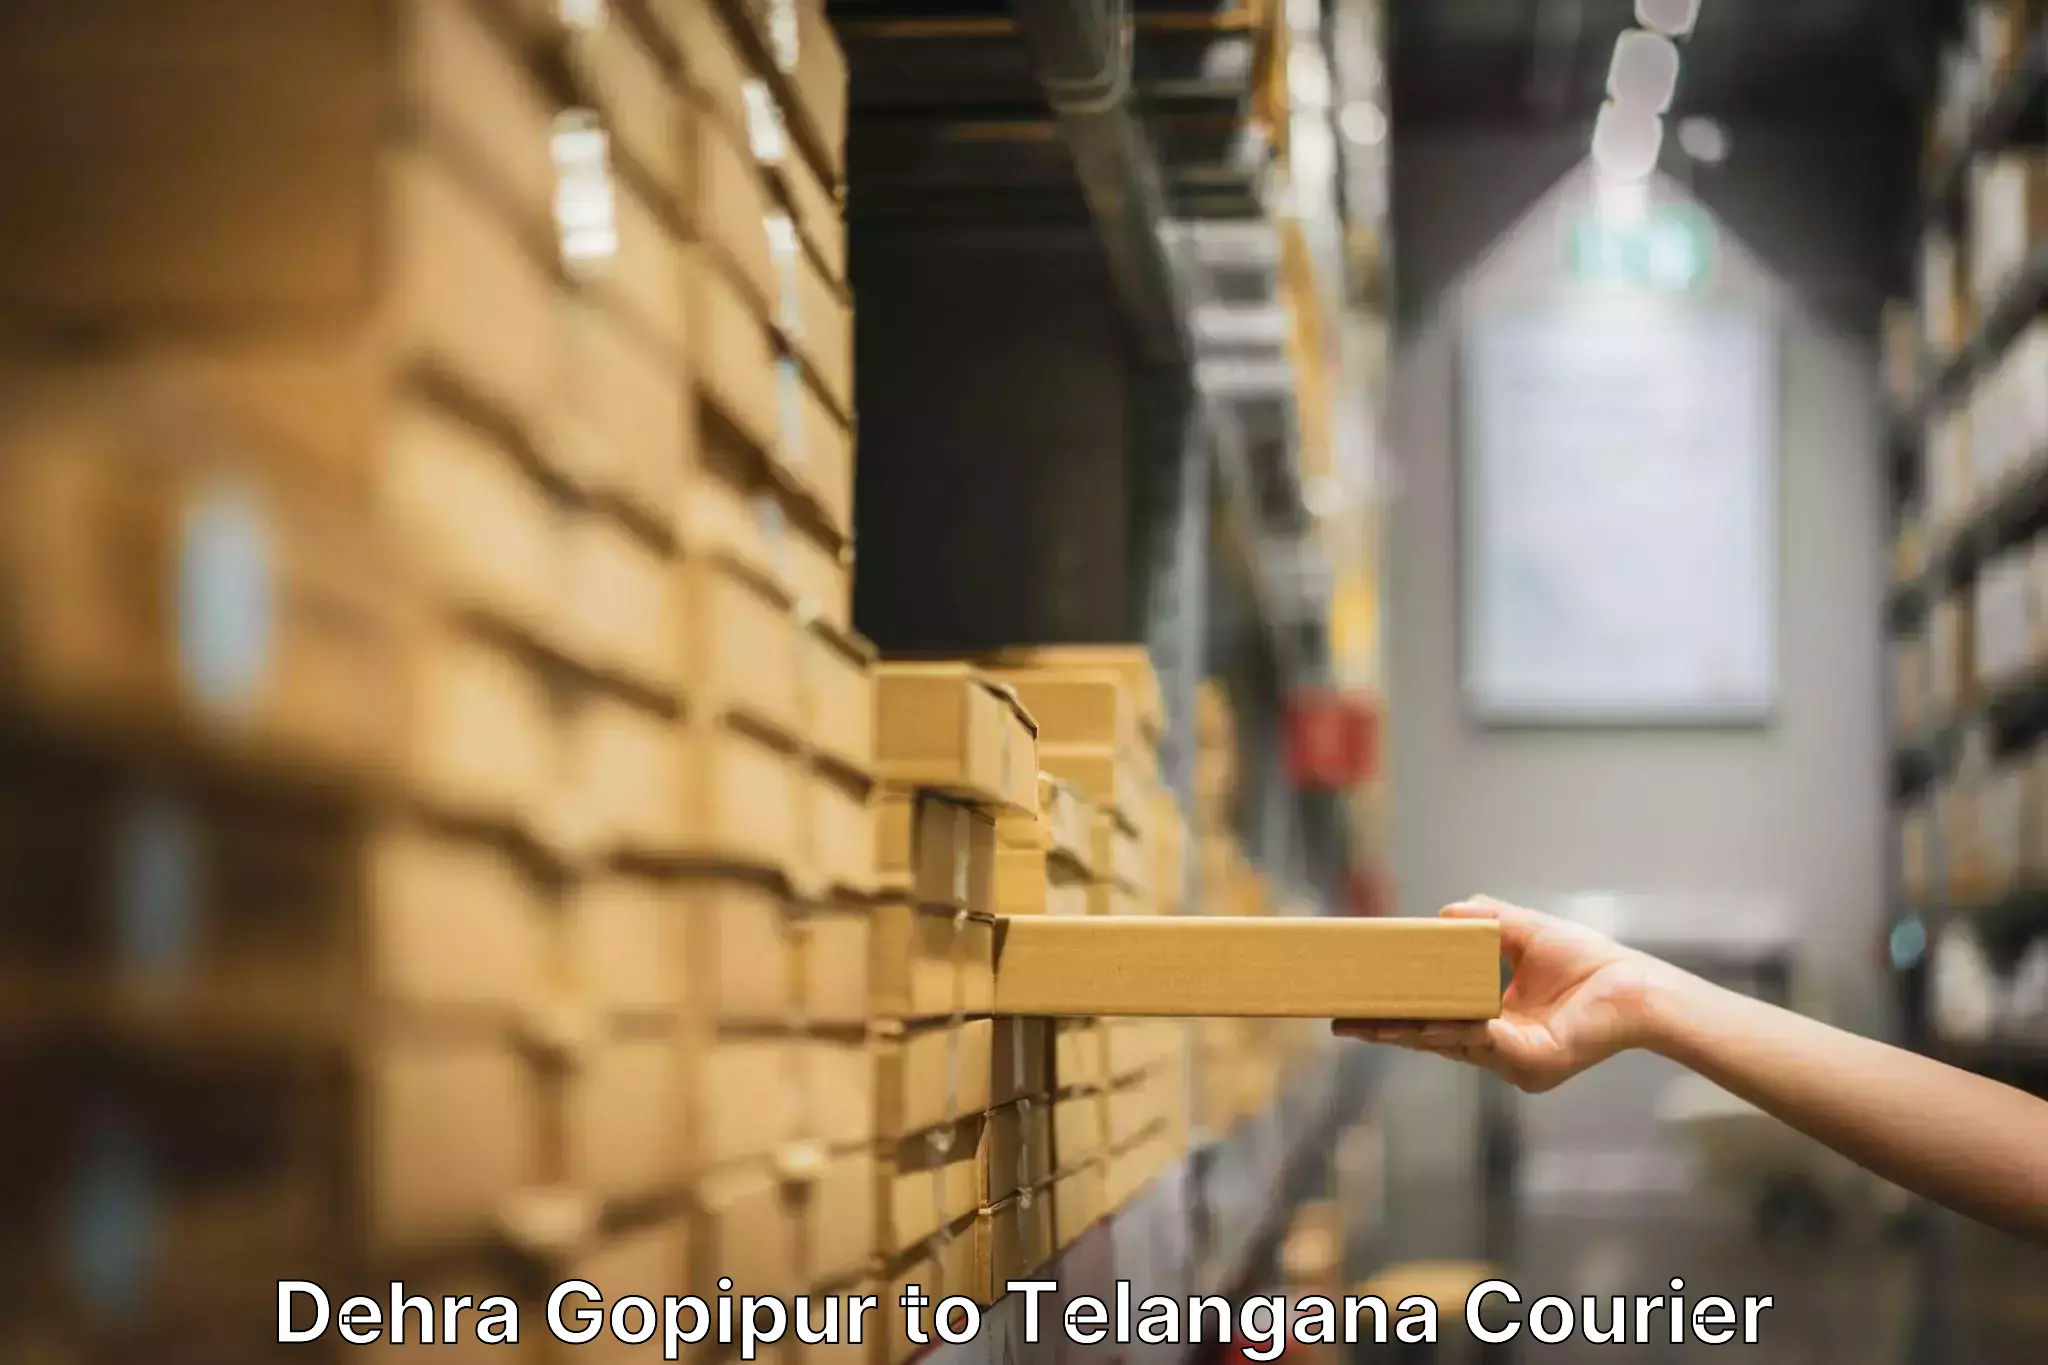 Furniture relocation experts Dehra Gopipur to Medchal